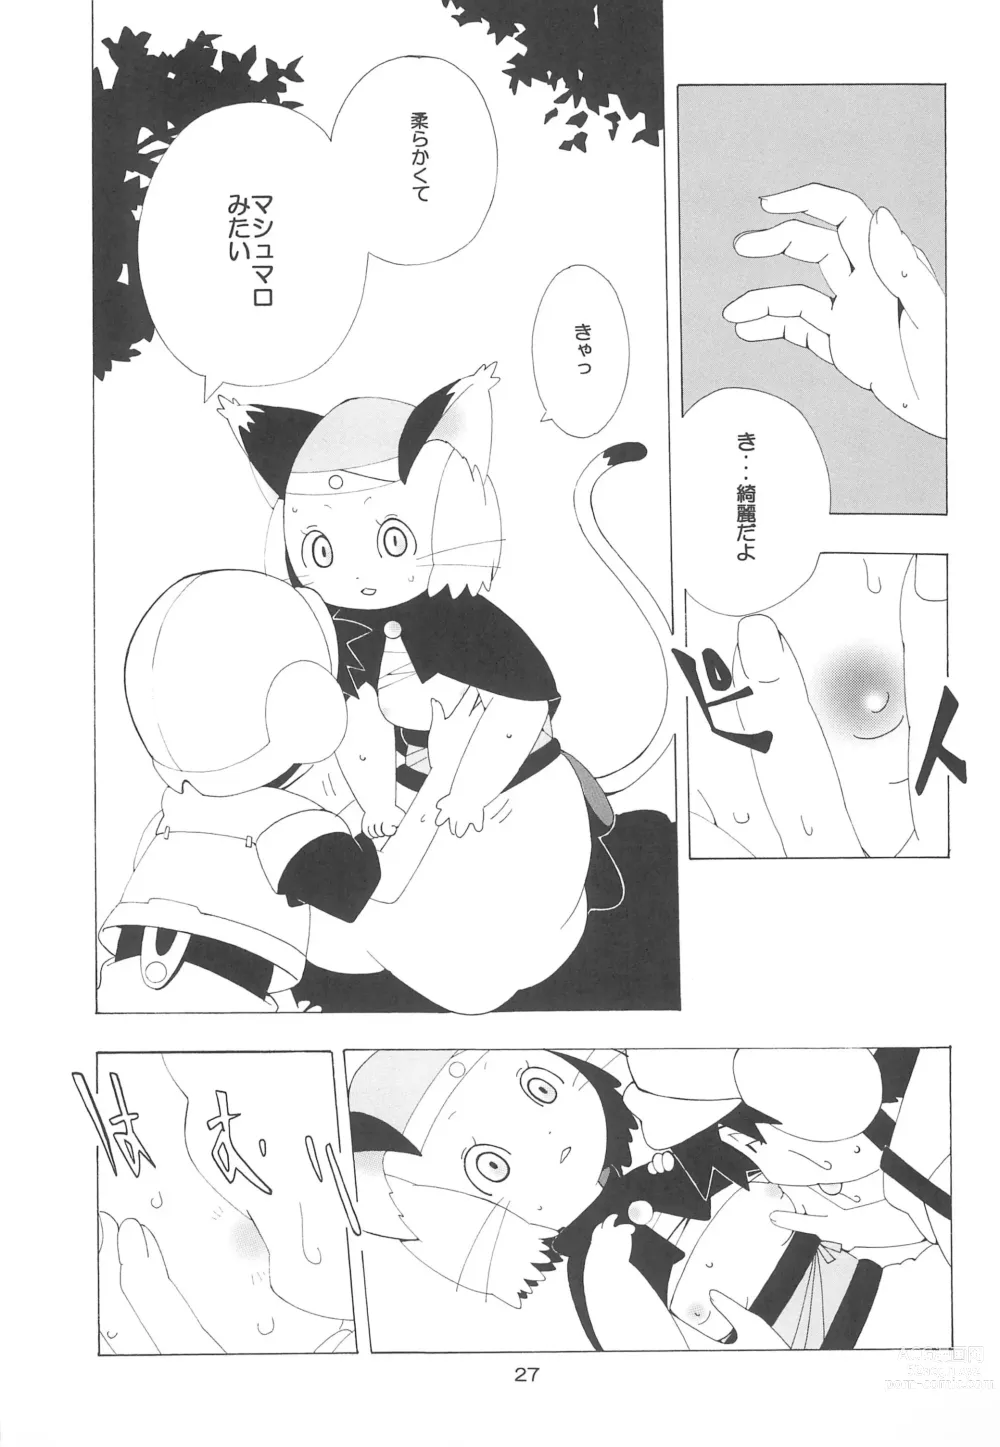 Page 27 of doujinshi Watamii!